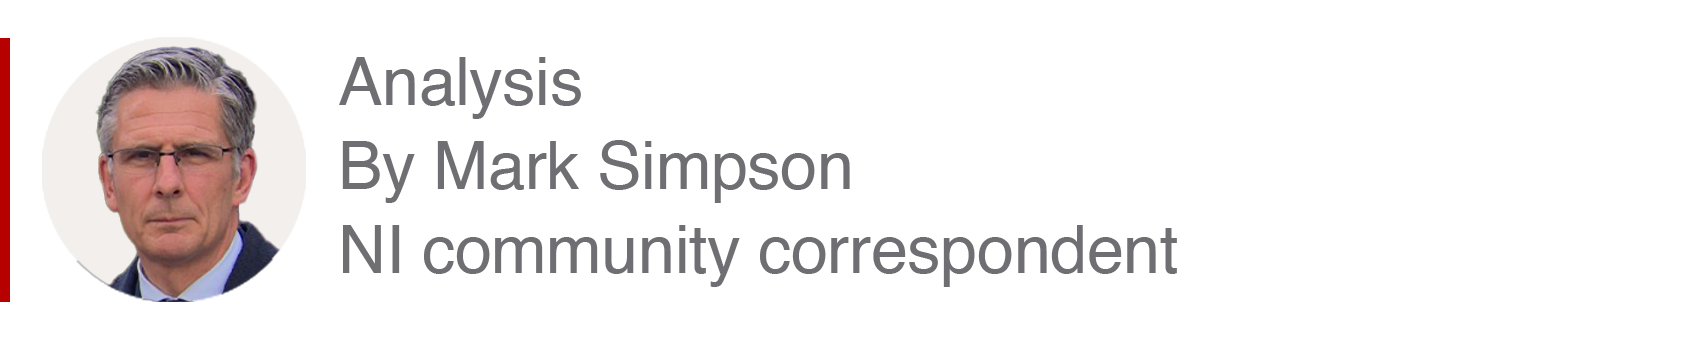 Analysis box by Mark Simpson, NI community correspondent